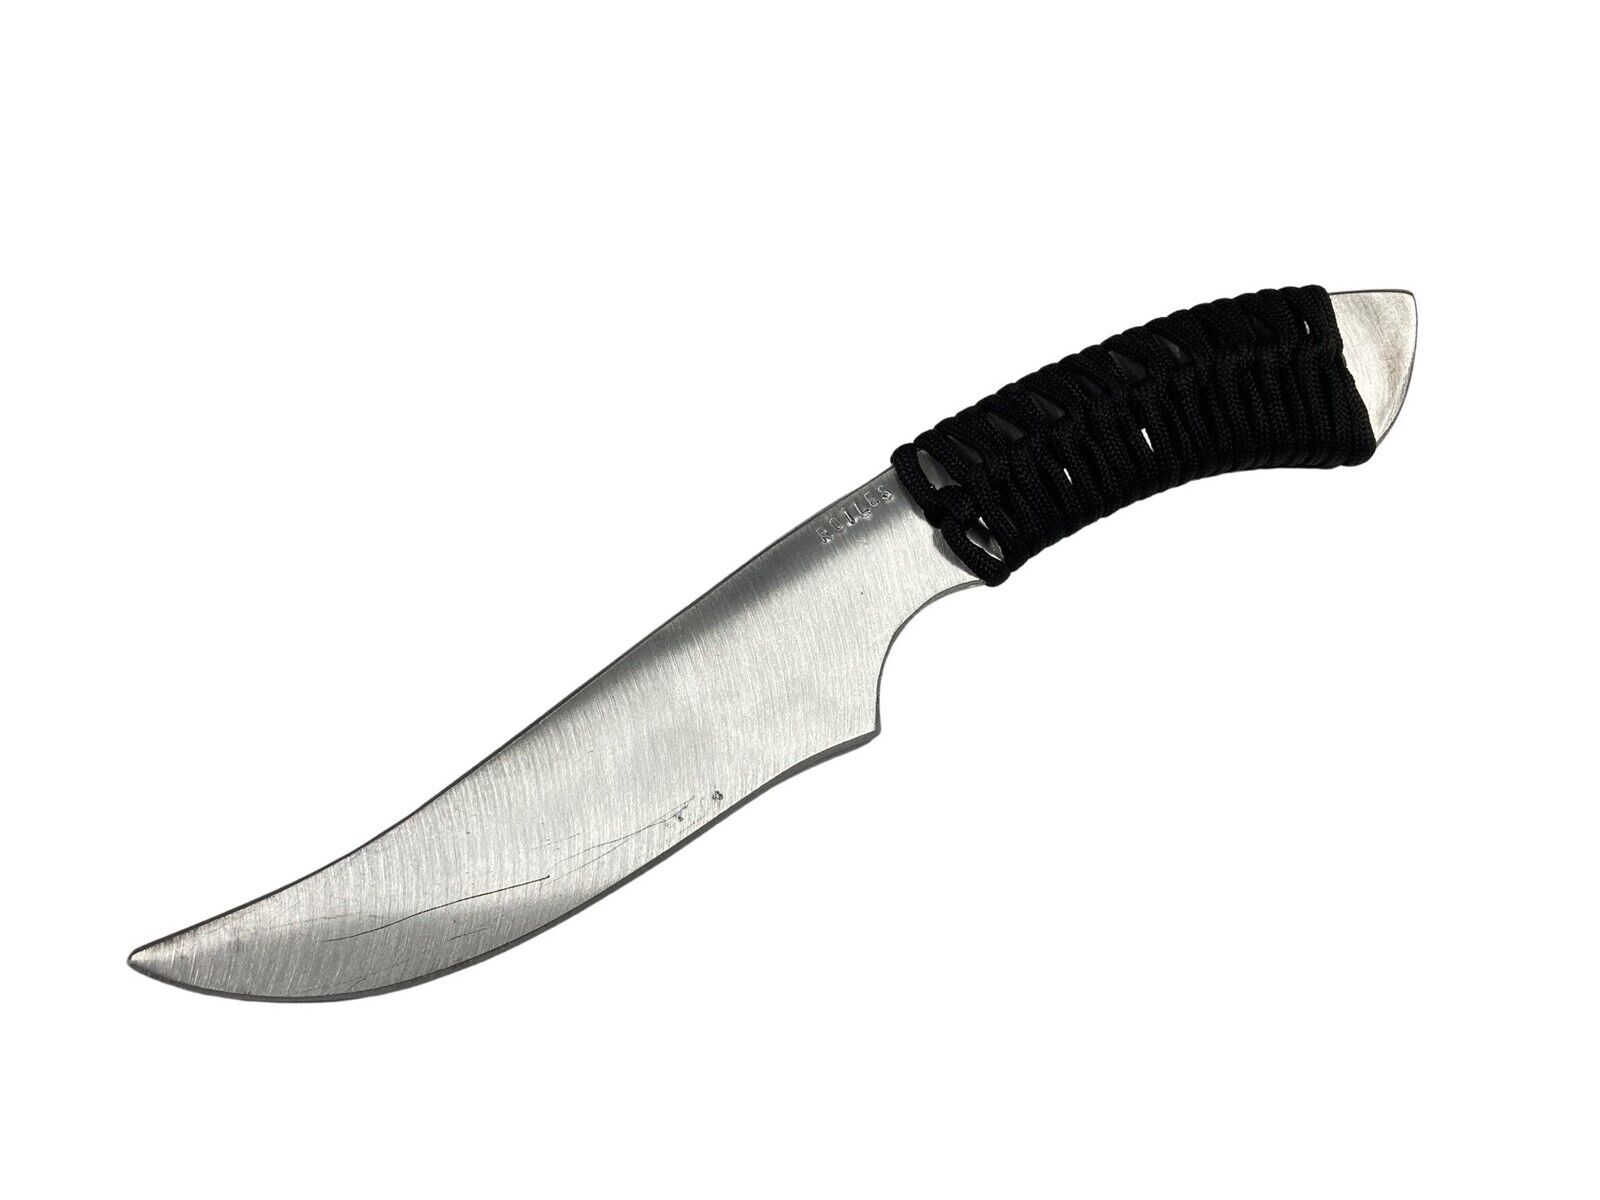 Roiles Deluxe 12" Single Edge Aluminum Martial Arts Escrima Kali Practice Knife